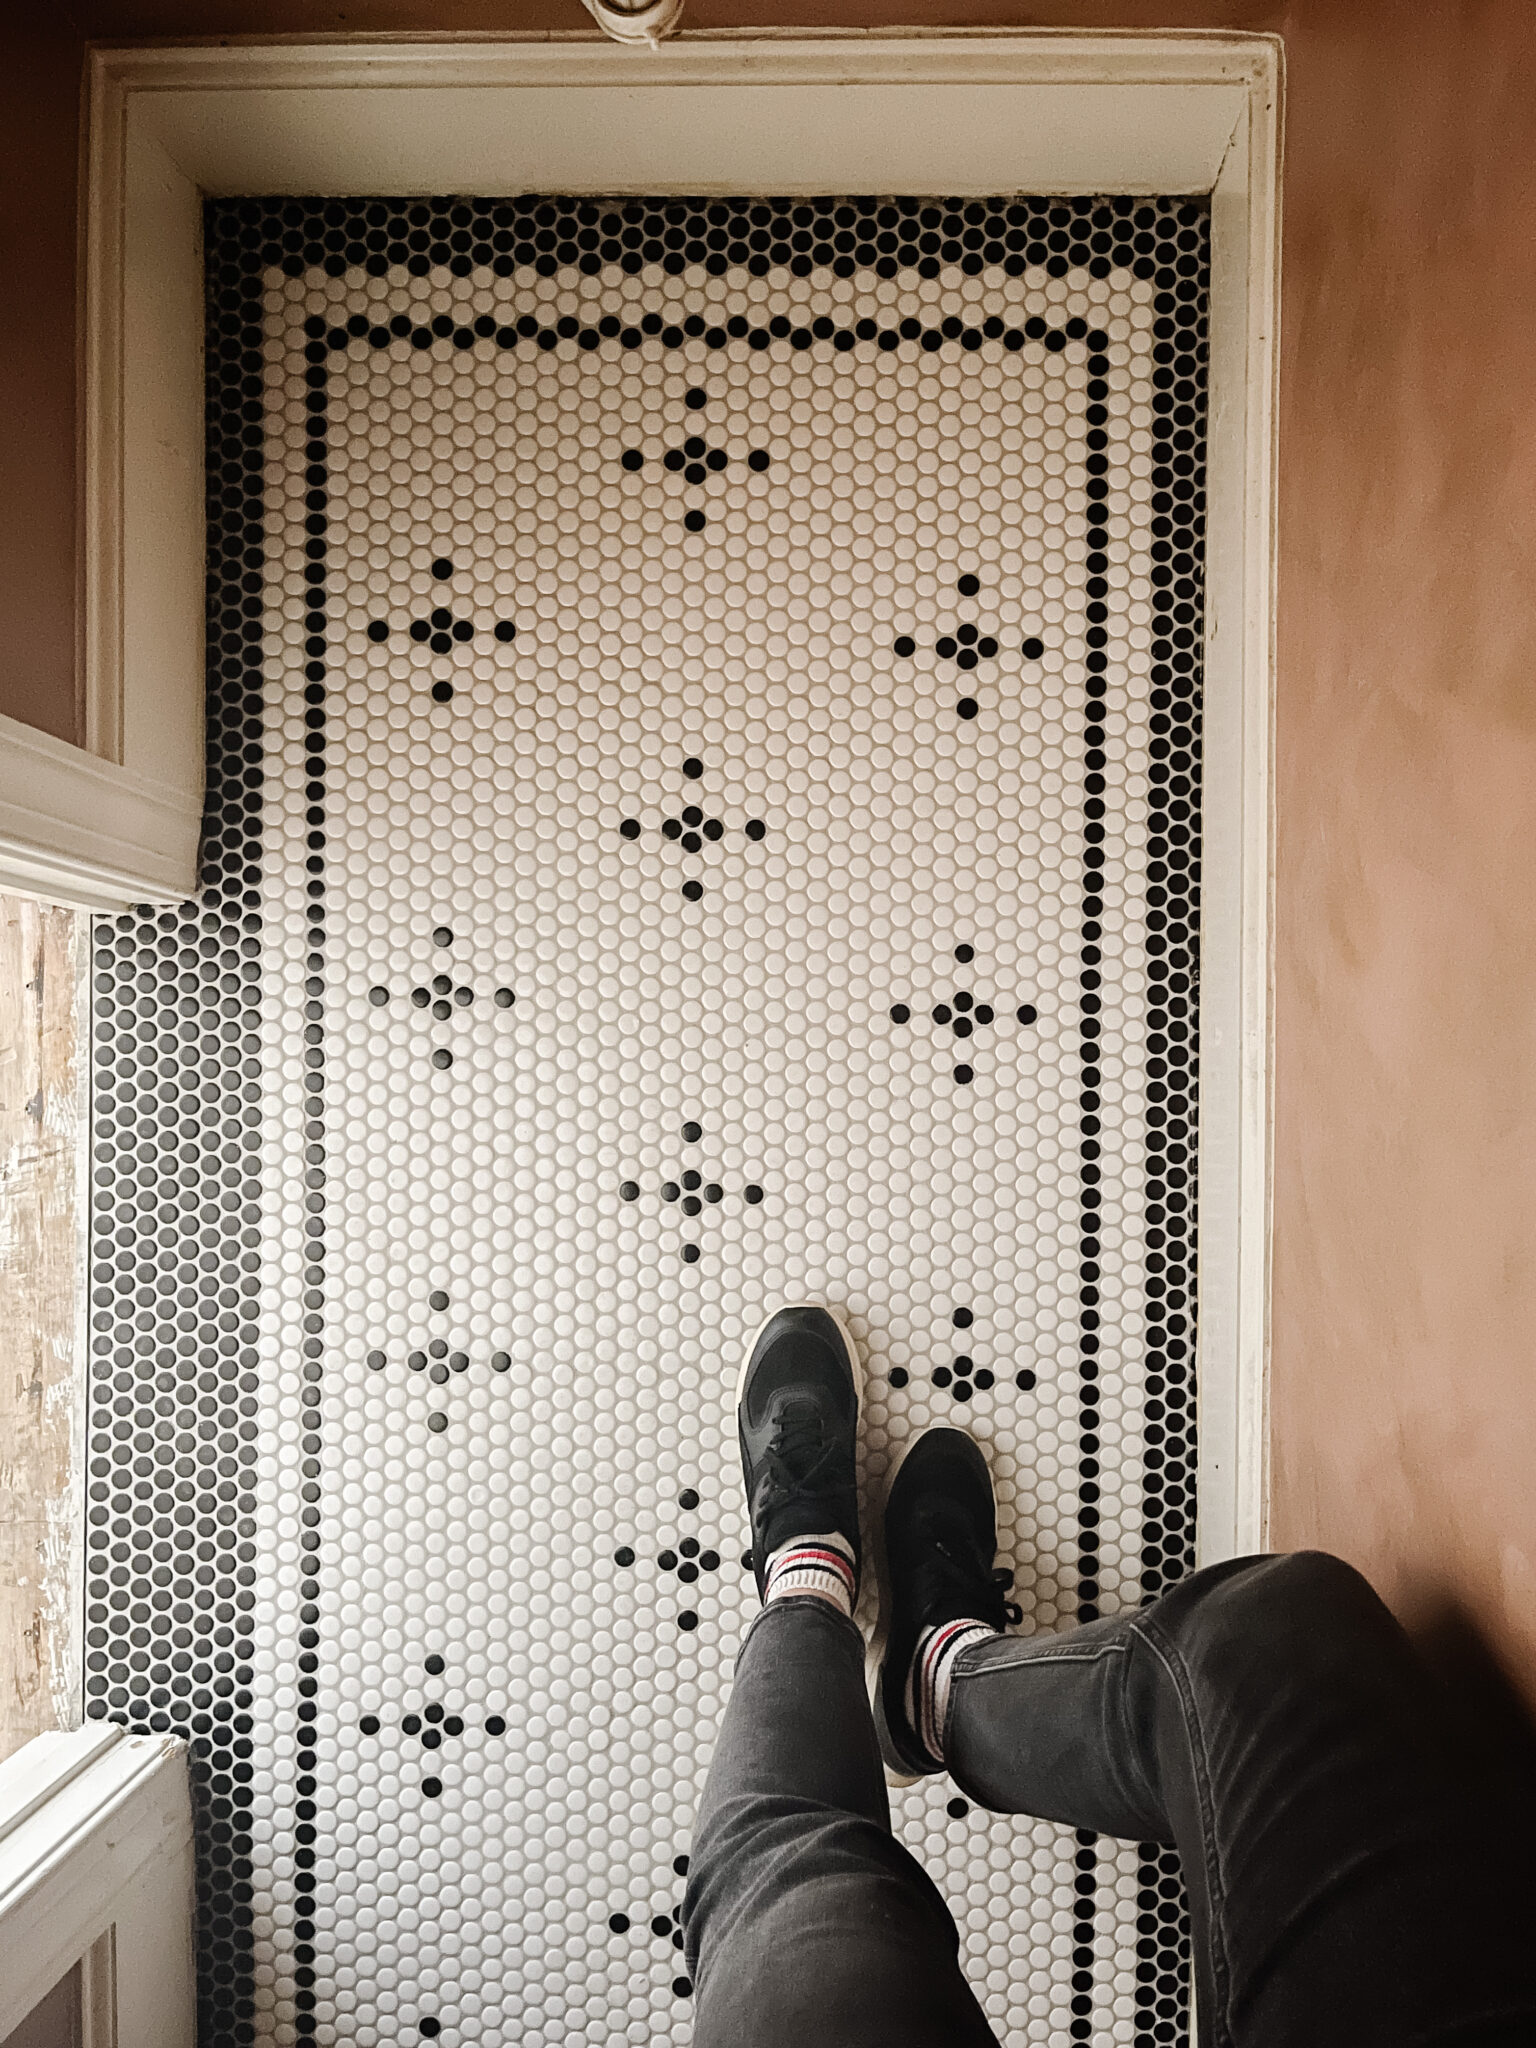 Diy Your Own Penny Tile Patterned Floor, Installing Penny Tile Floor